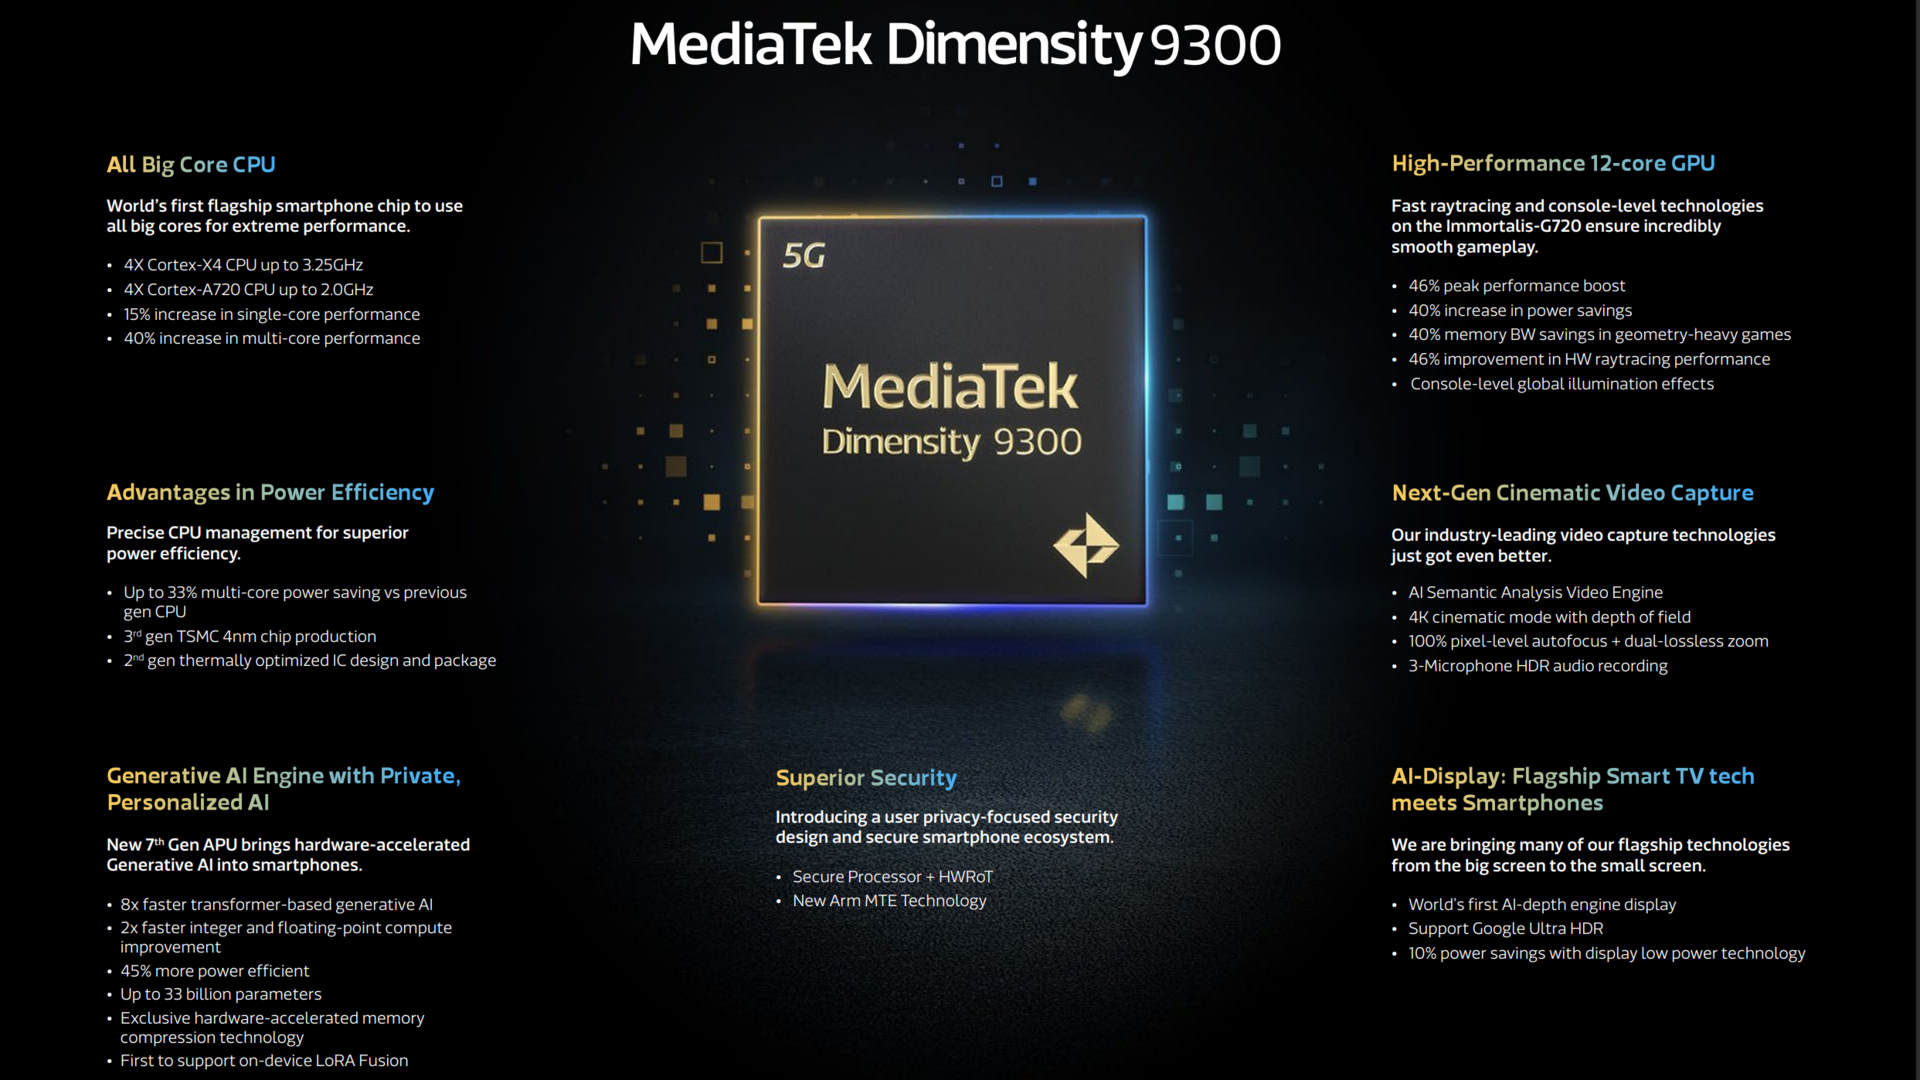 MediaTek Dimensity 9300 infographic